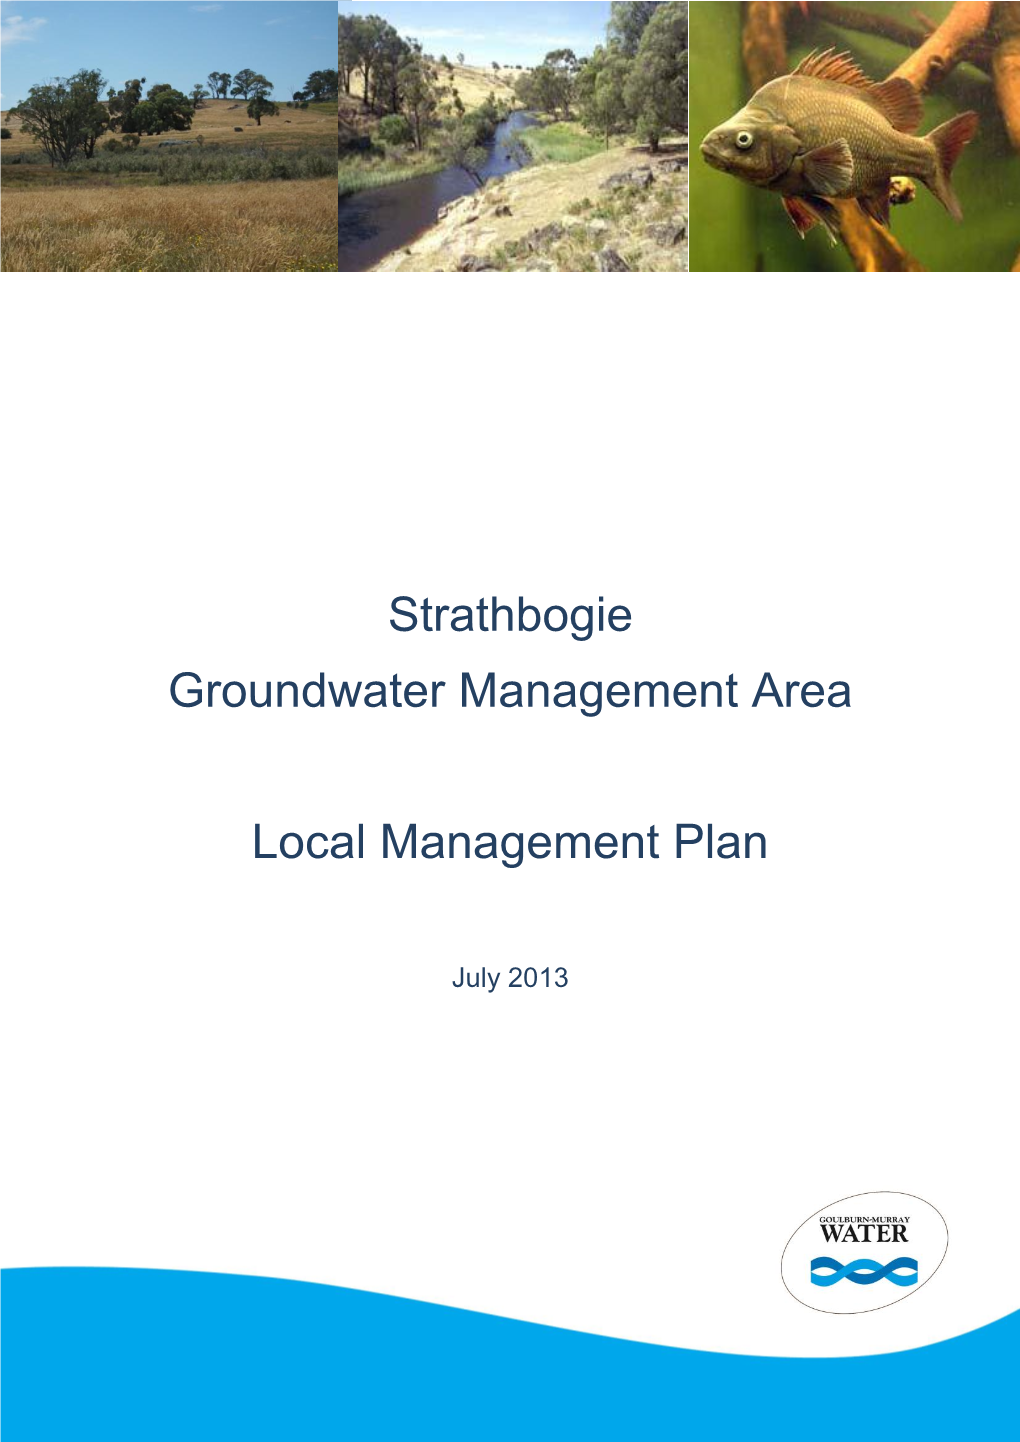 Strathbogie Groundwater Management Area Local Management Plan